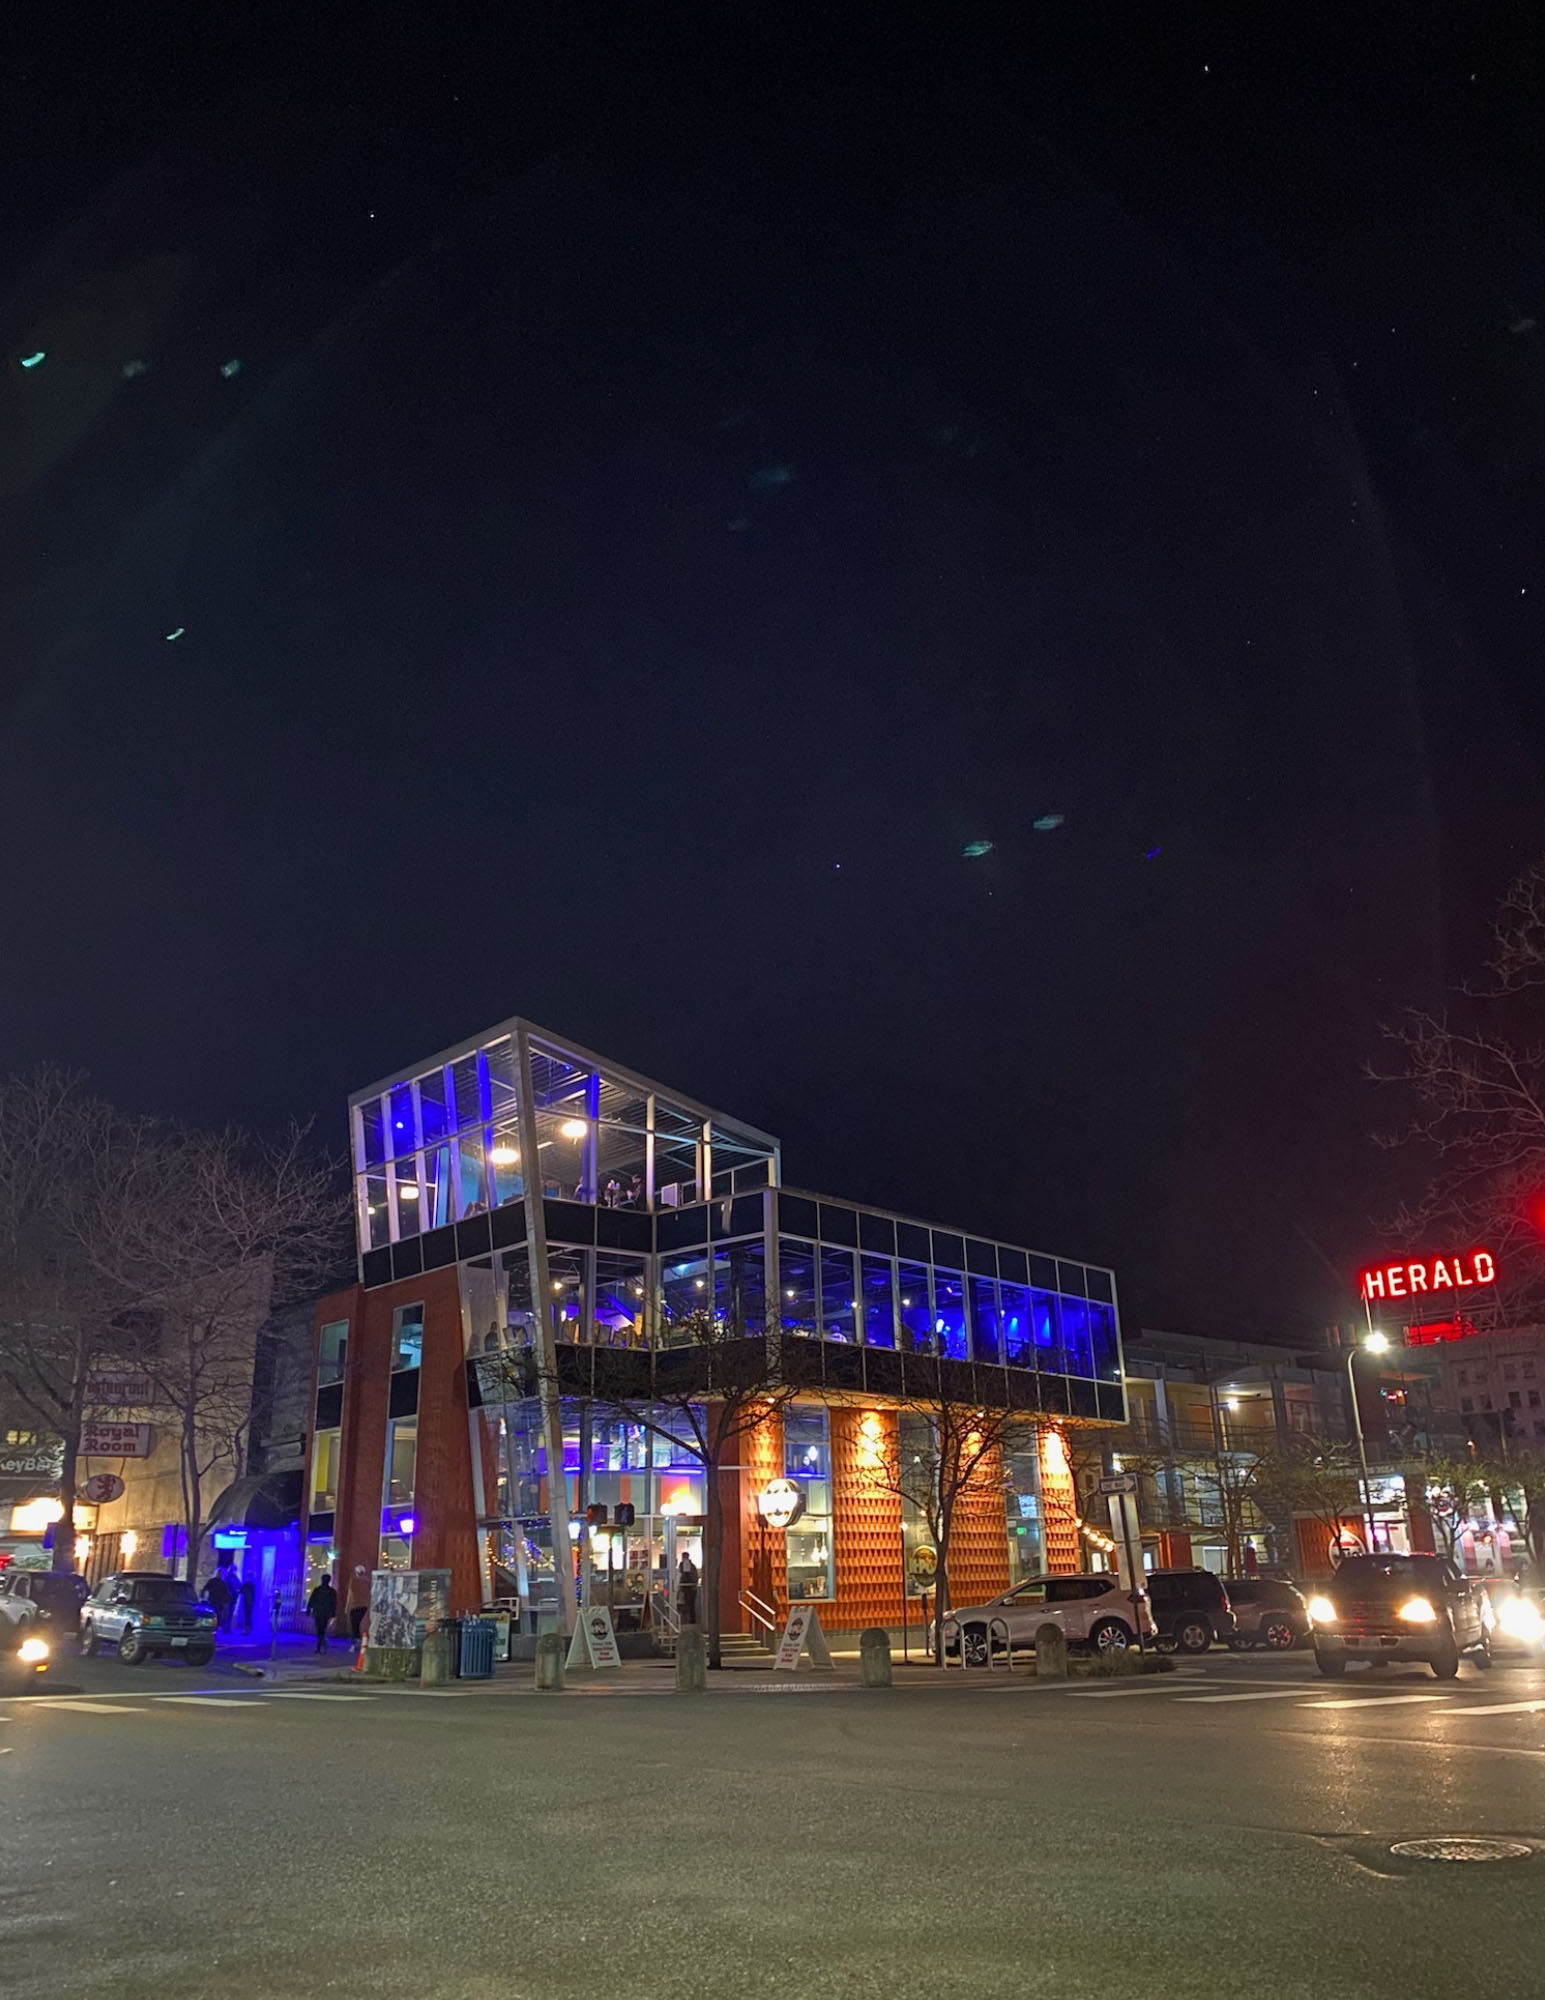 nighttime street scene featuring a windowed building emitting blue light